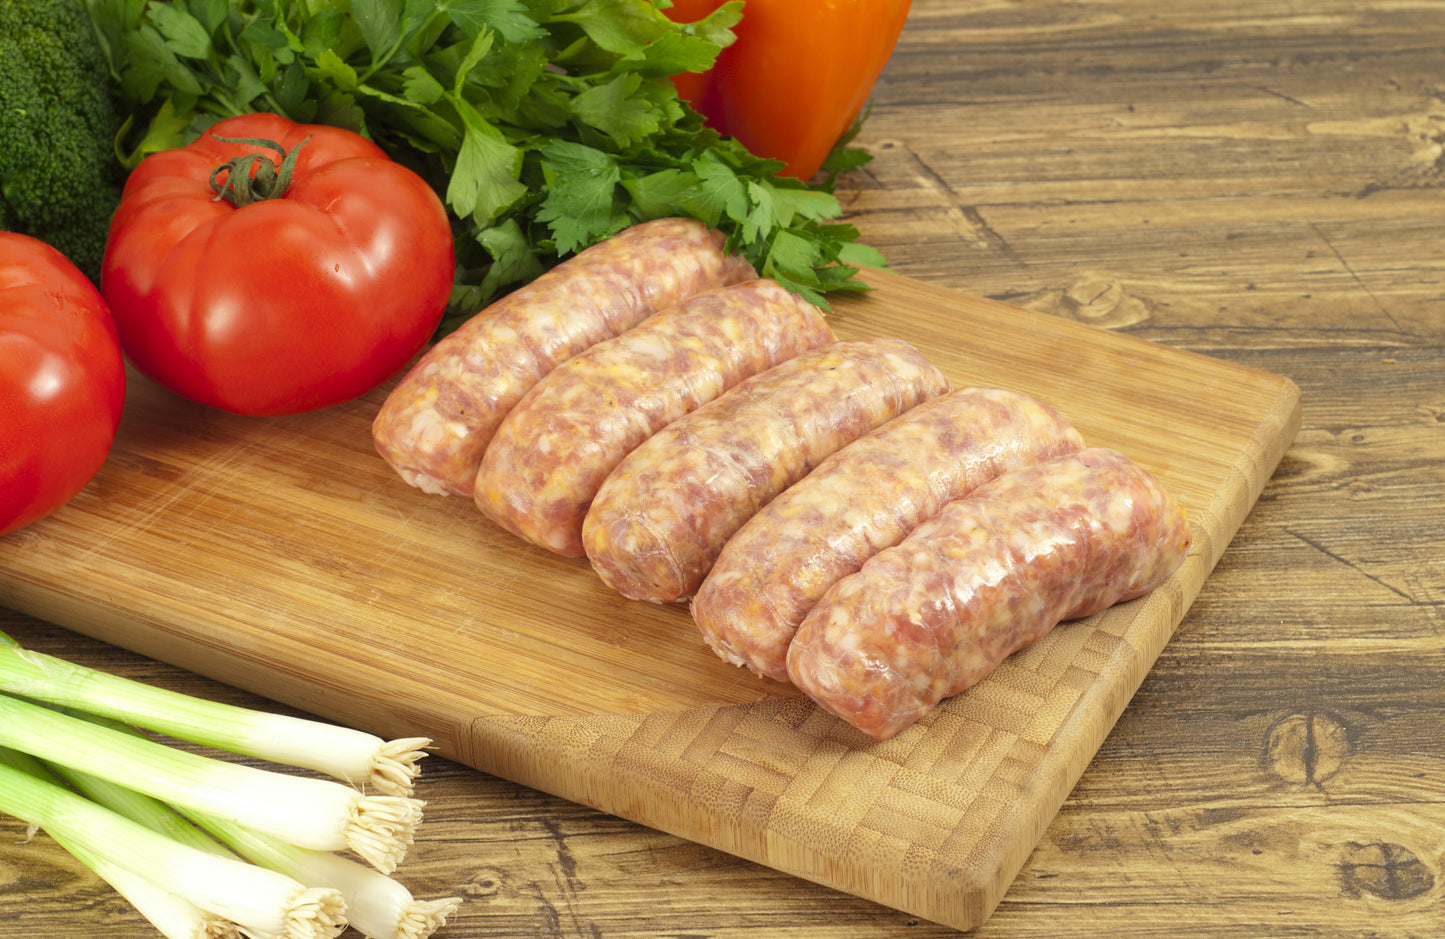 Traditional Pork Sausage - Thick